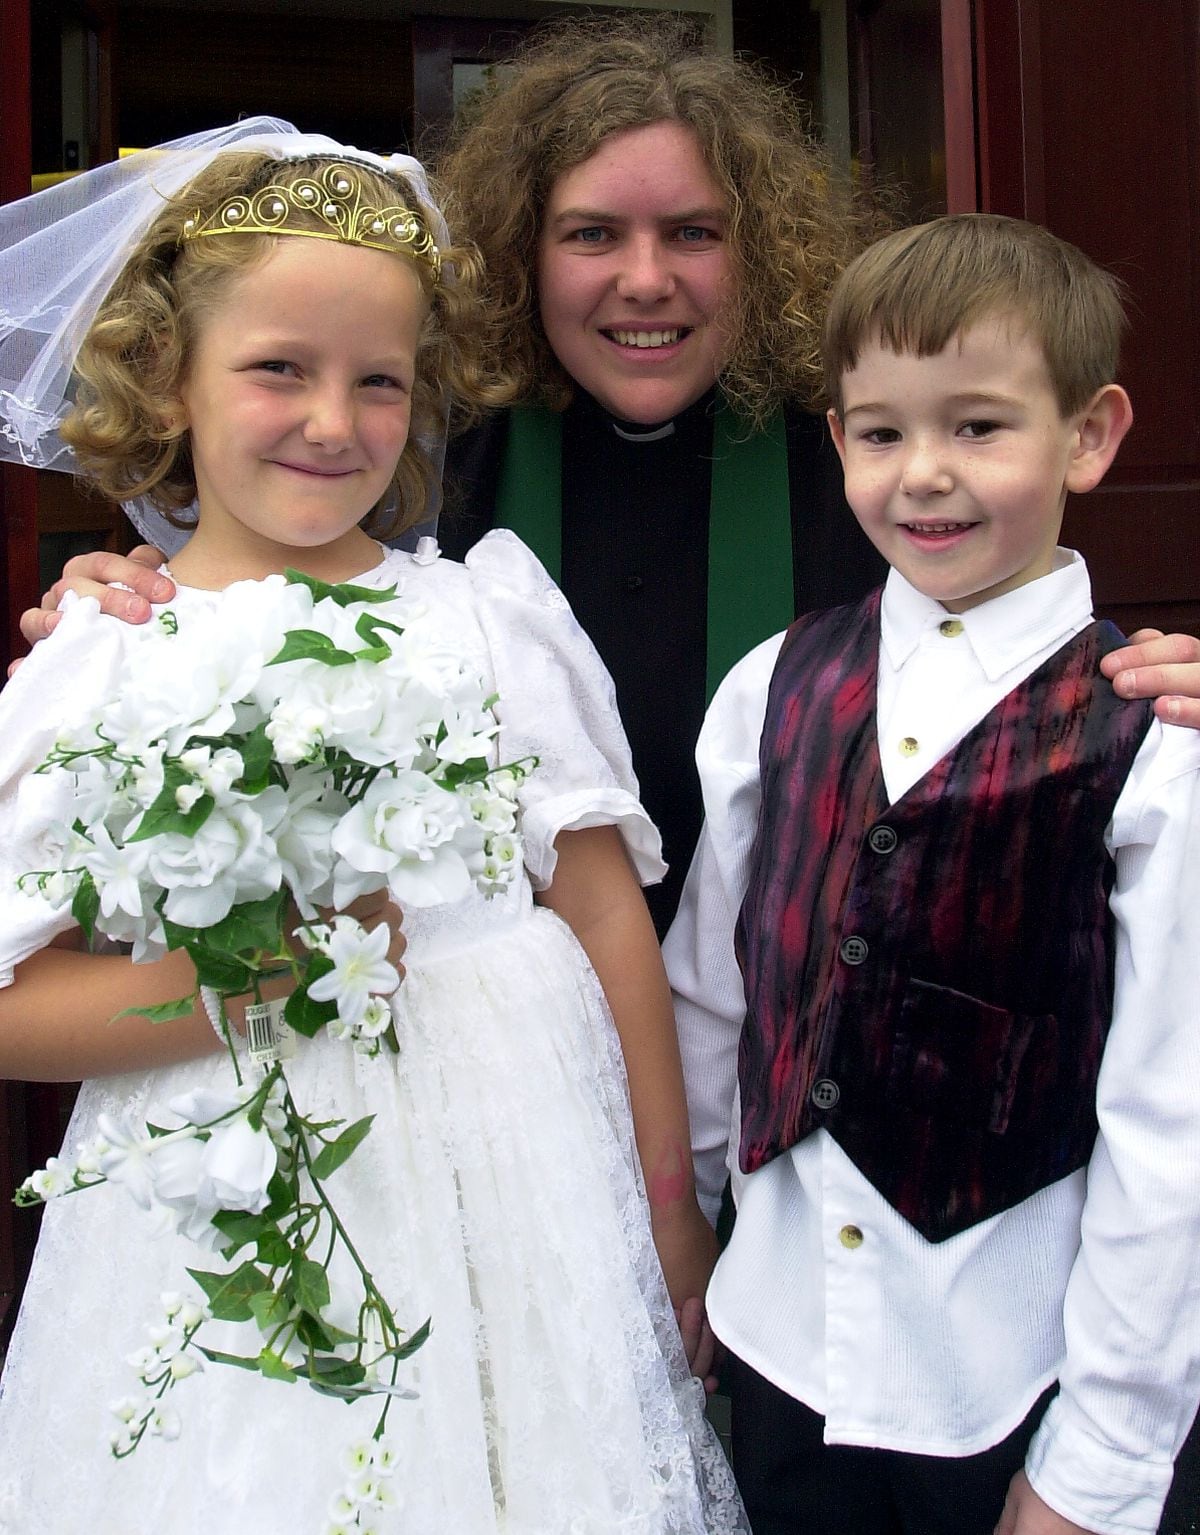 The Rev Susan McIvor with Luke Eggerton and Alice Ball, both aged six, of Ketley Infants School at a mock wedding at Ketley Methodist Church in 2000.